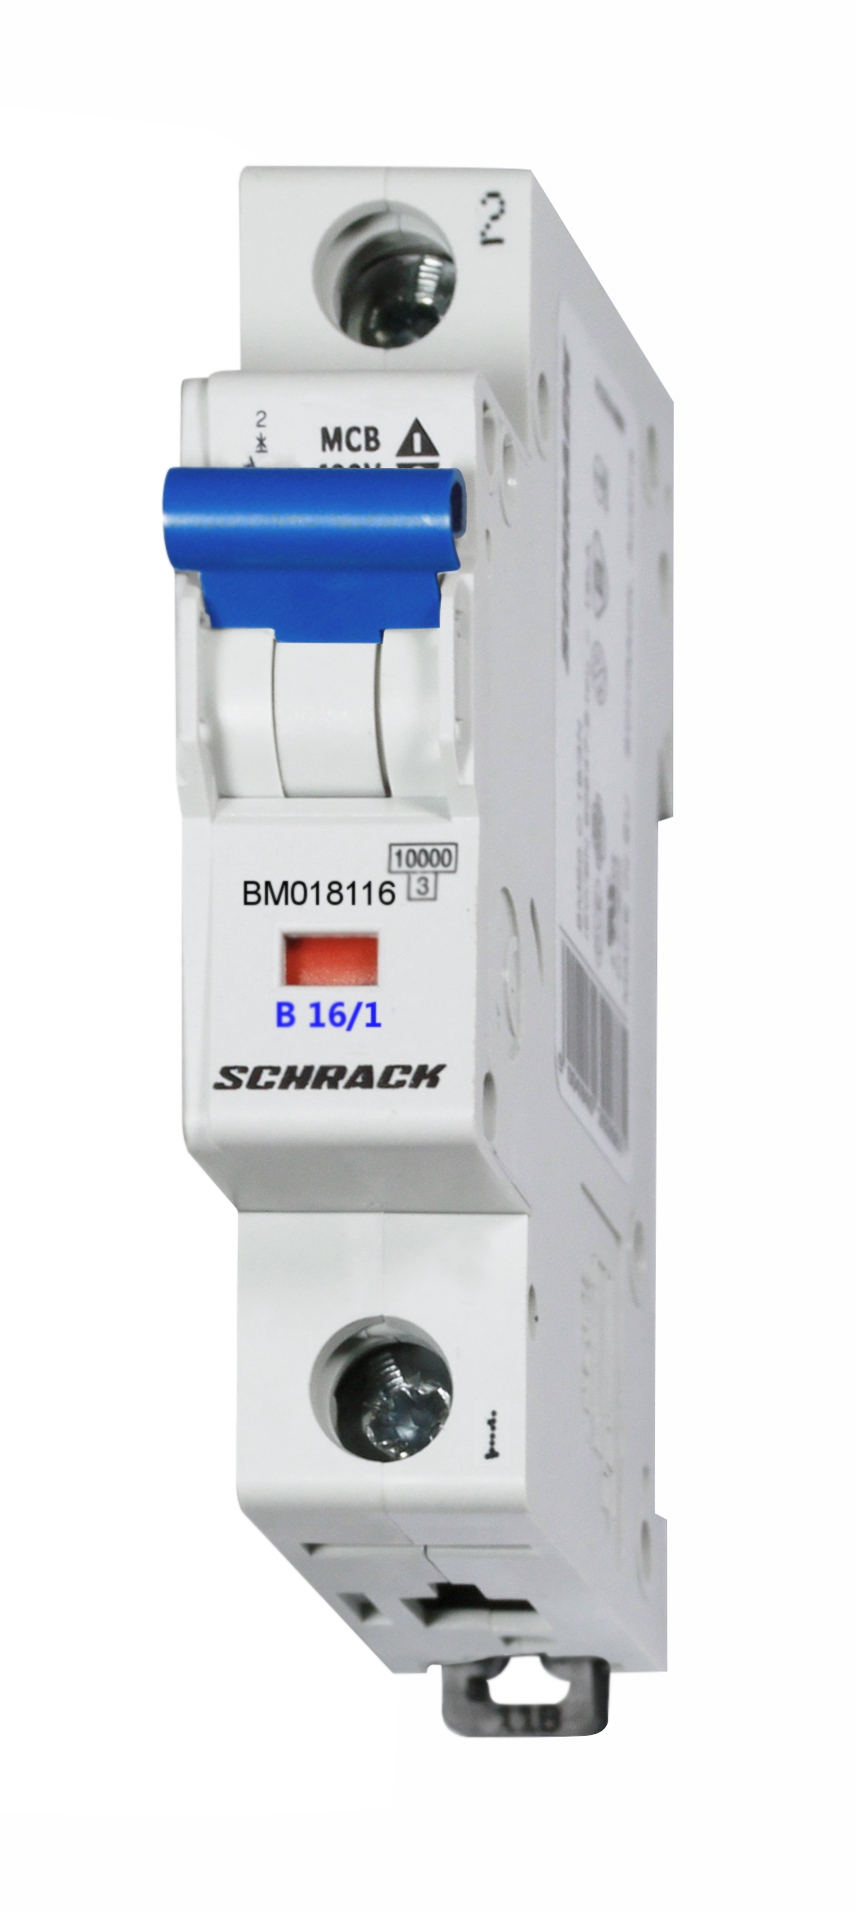 BM018116-- Schrack Technik